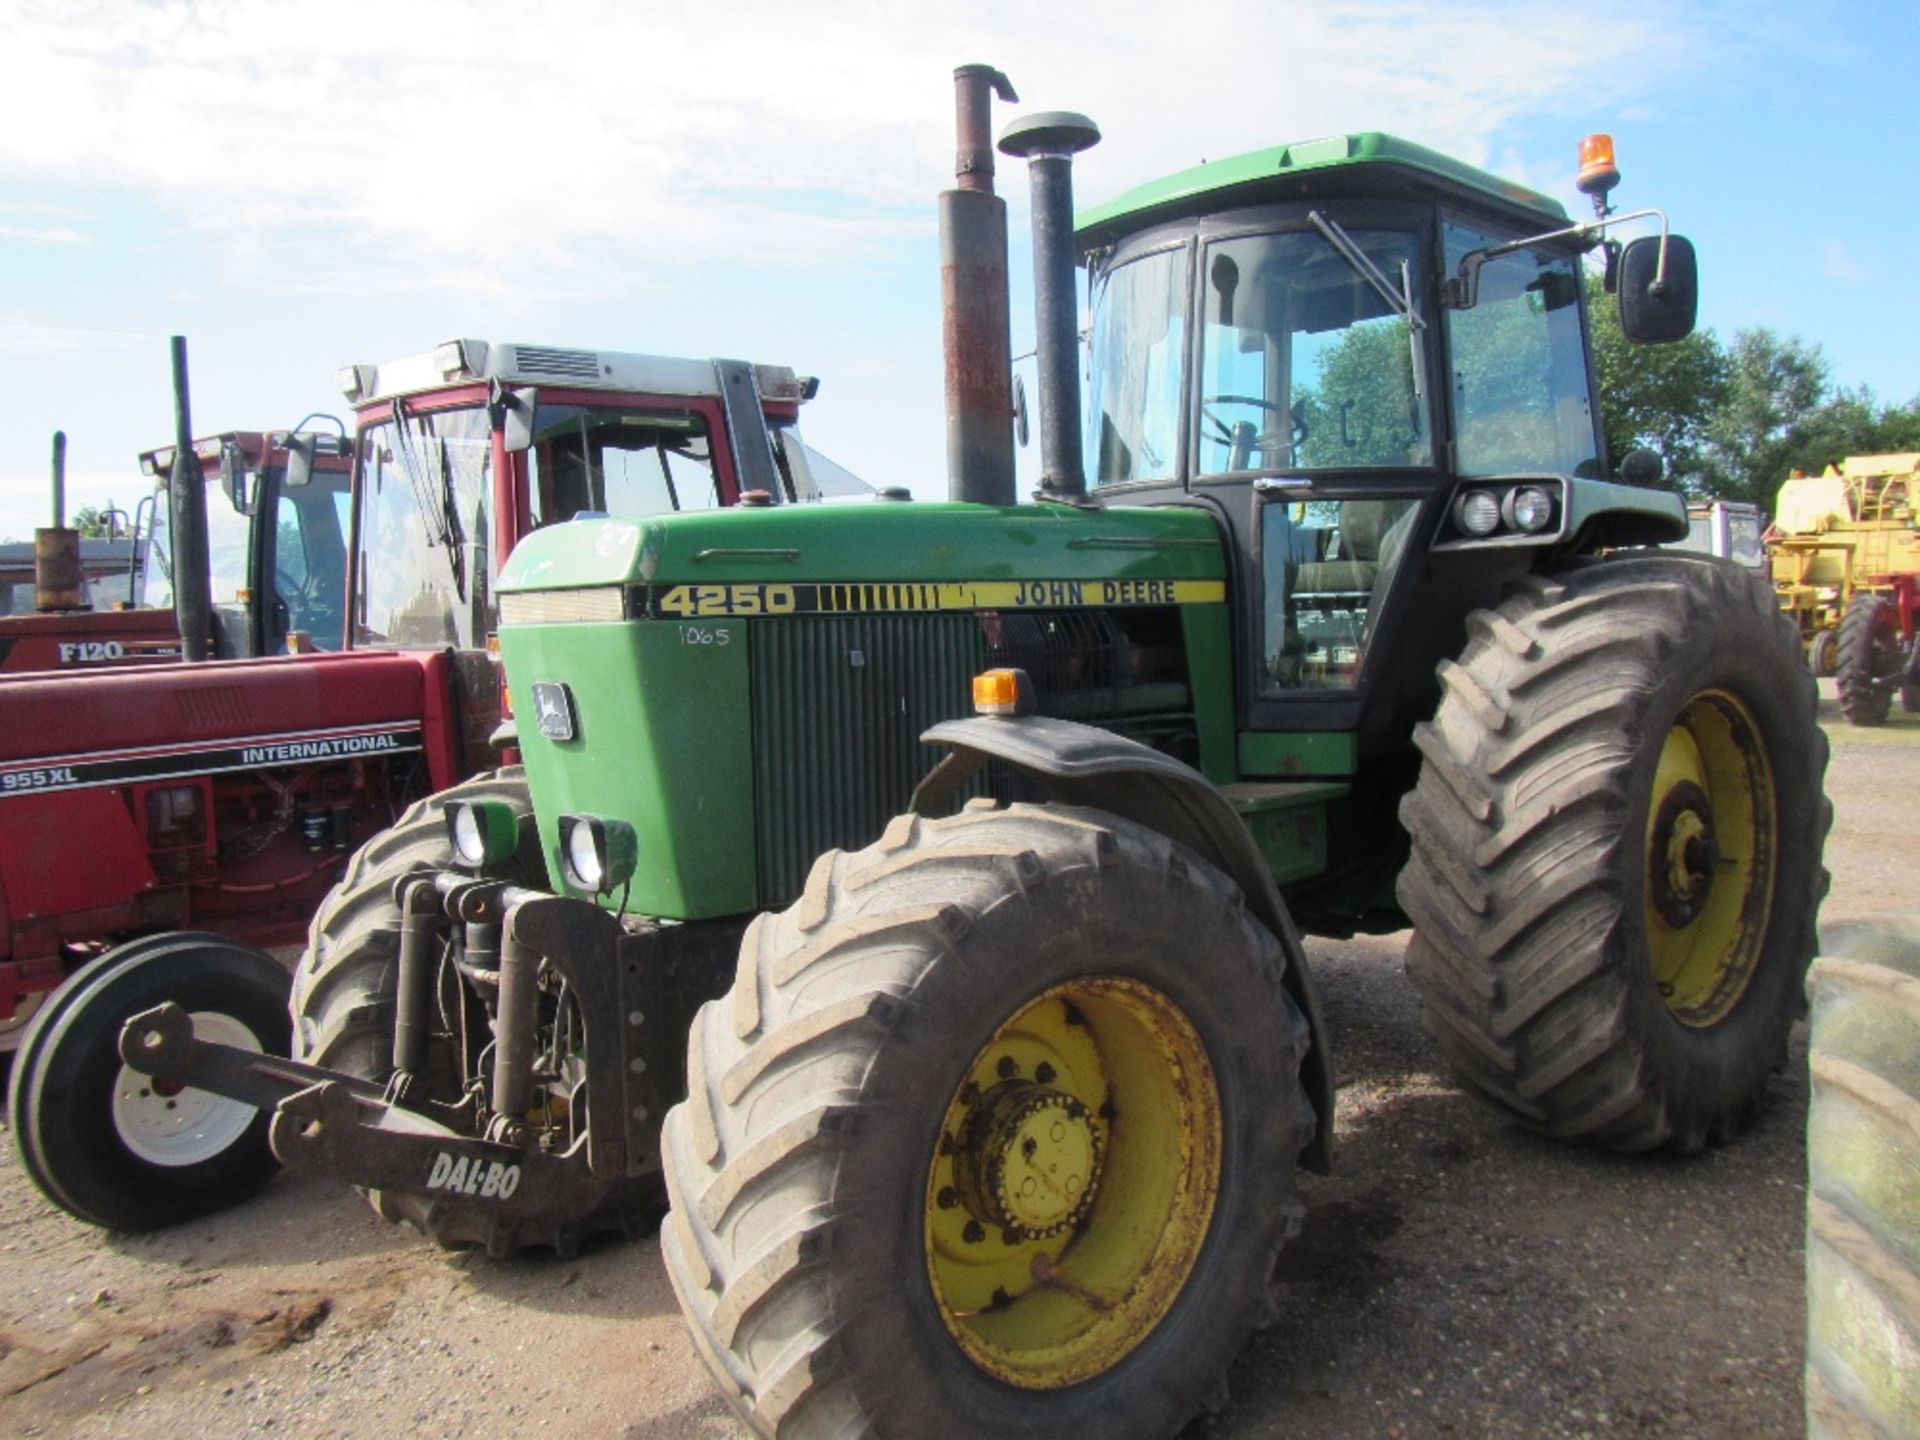 John Deere 4250 Tractor. 1st Regd 19/1/88. V5 has been applied for. Ser. No. RW4250E013056